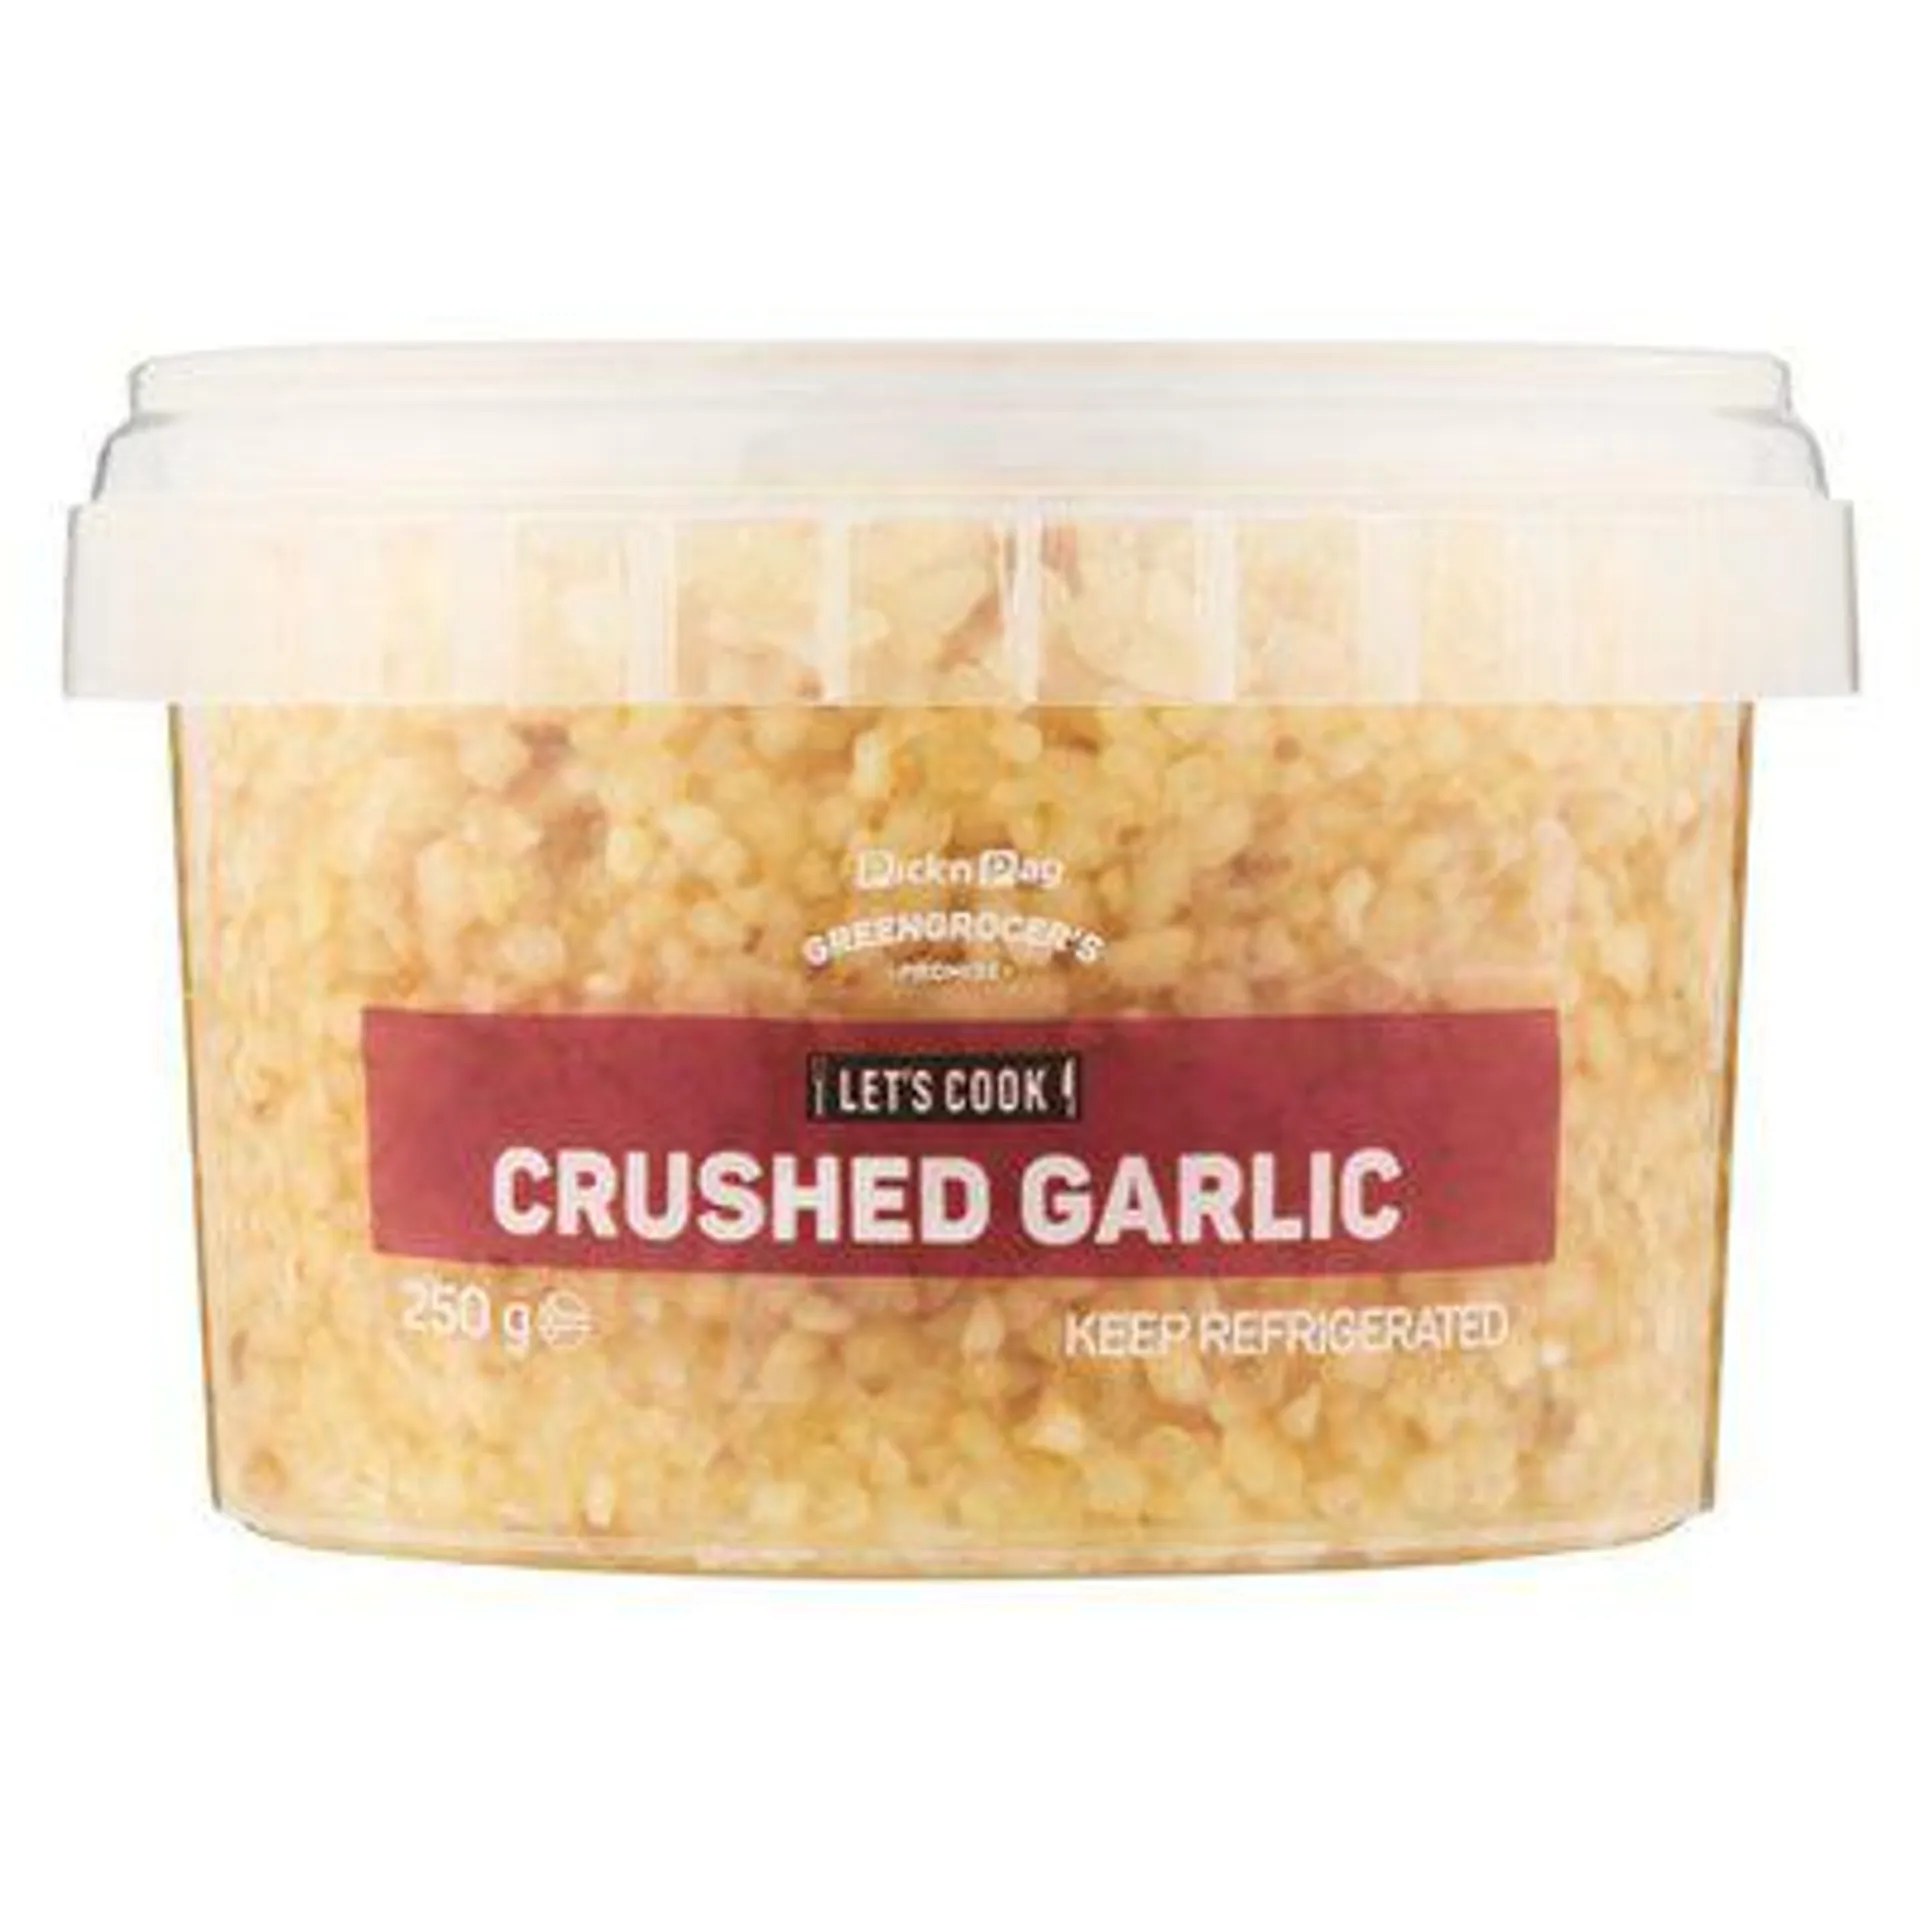 Let's Cook Crushed Garlic 250g